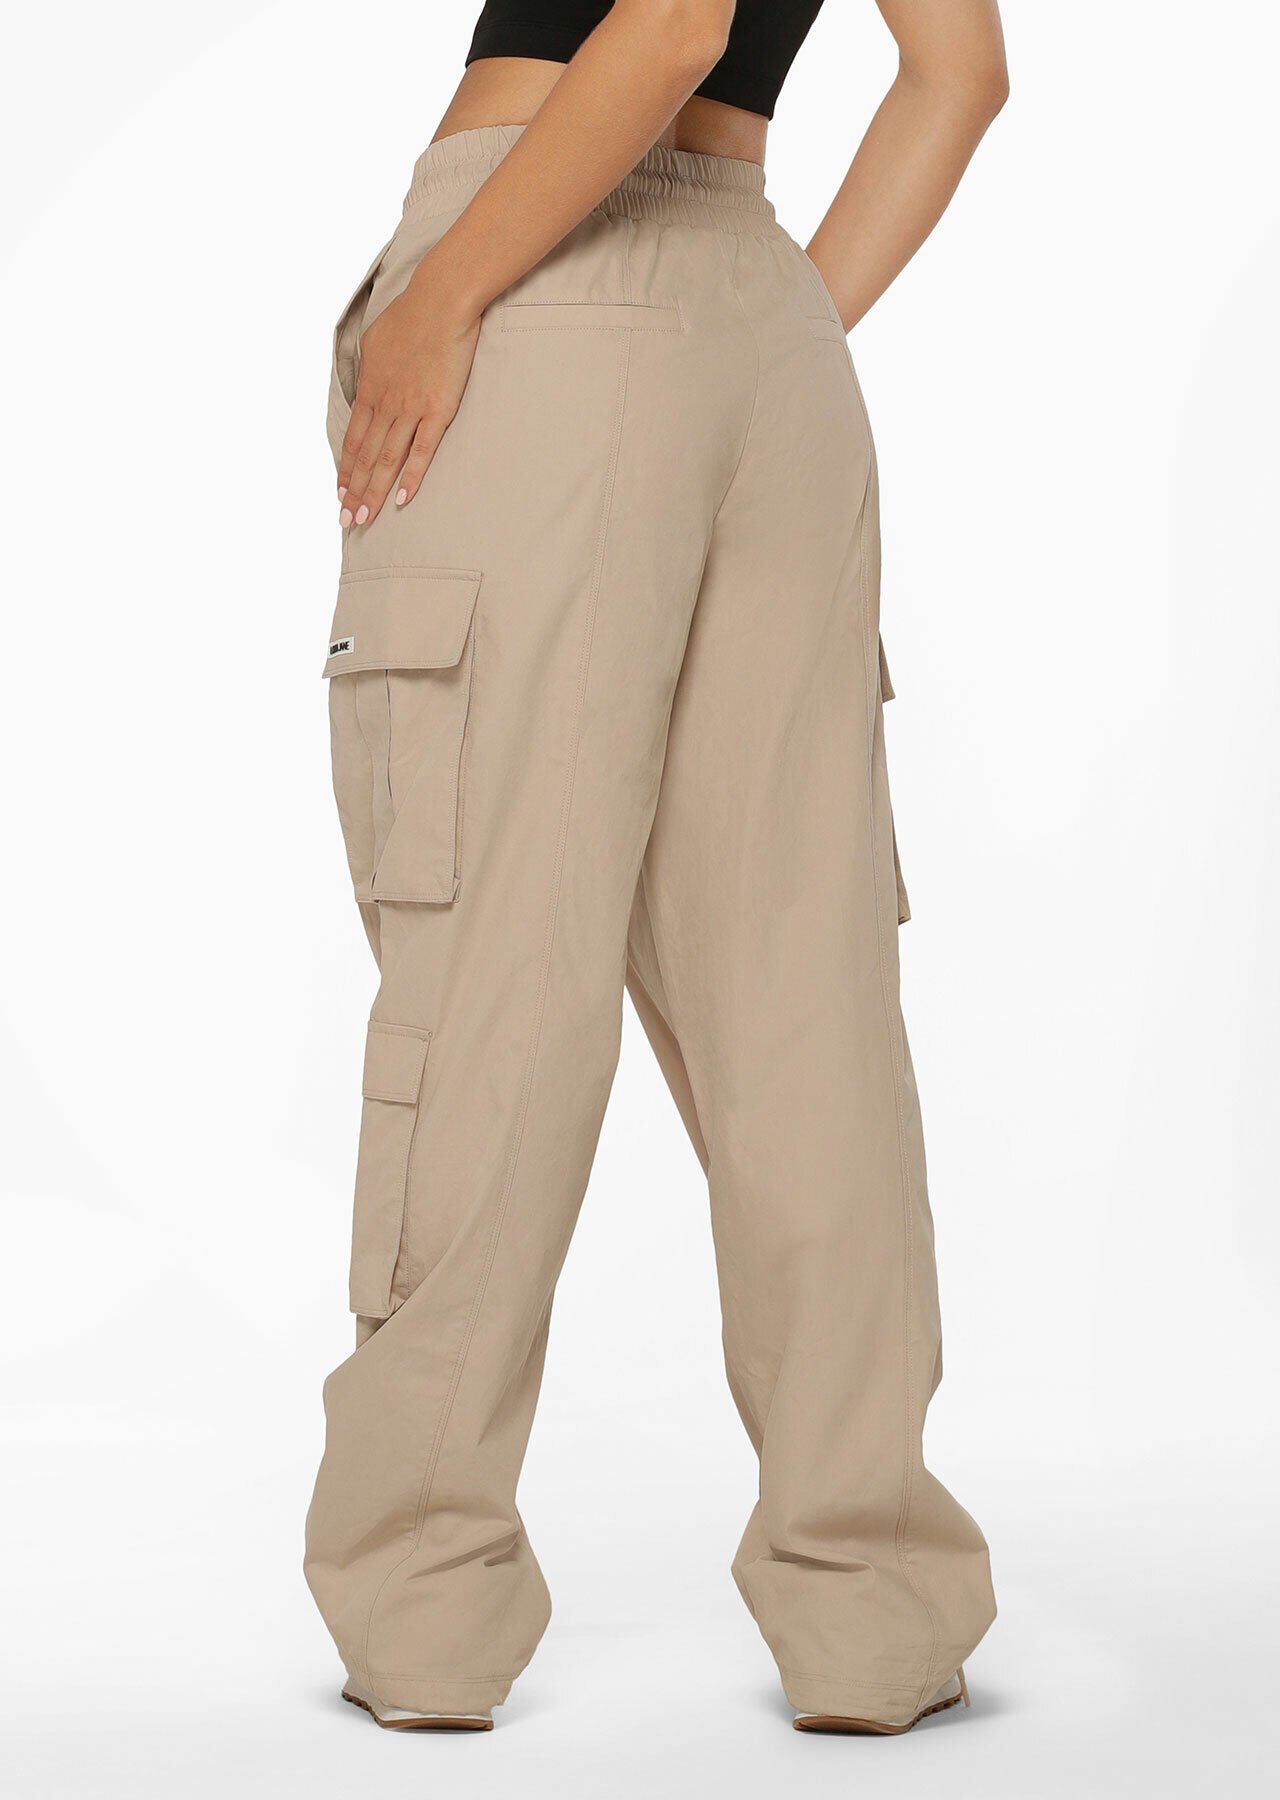 King Gee Women's Work Pants (K43530) – Budget Workwear New Zealand Store